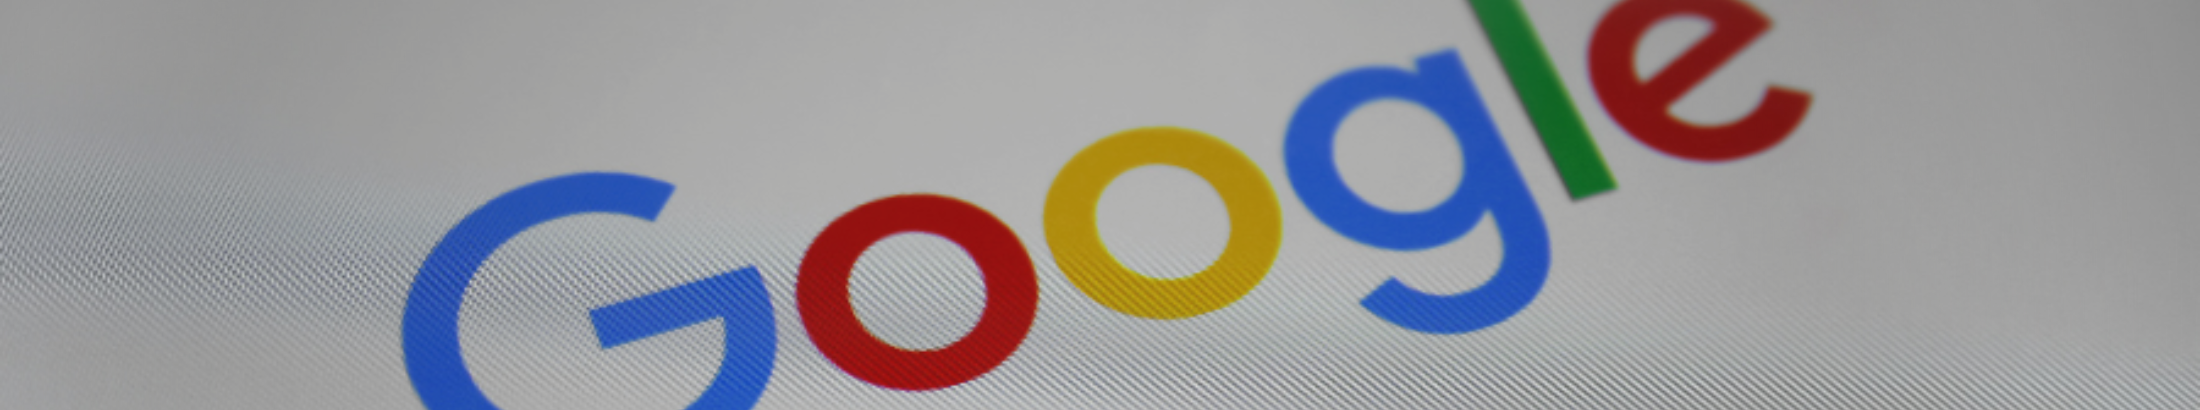 The Google logo on a computer screen